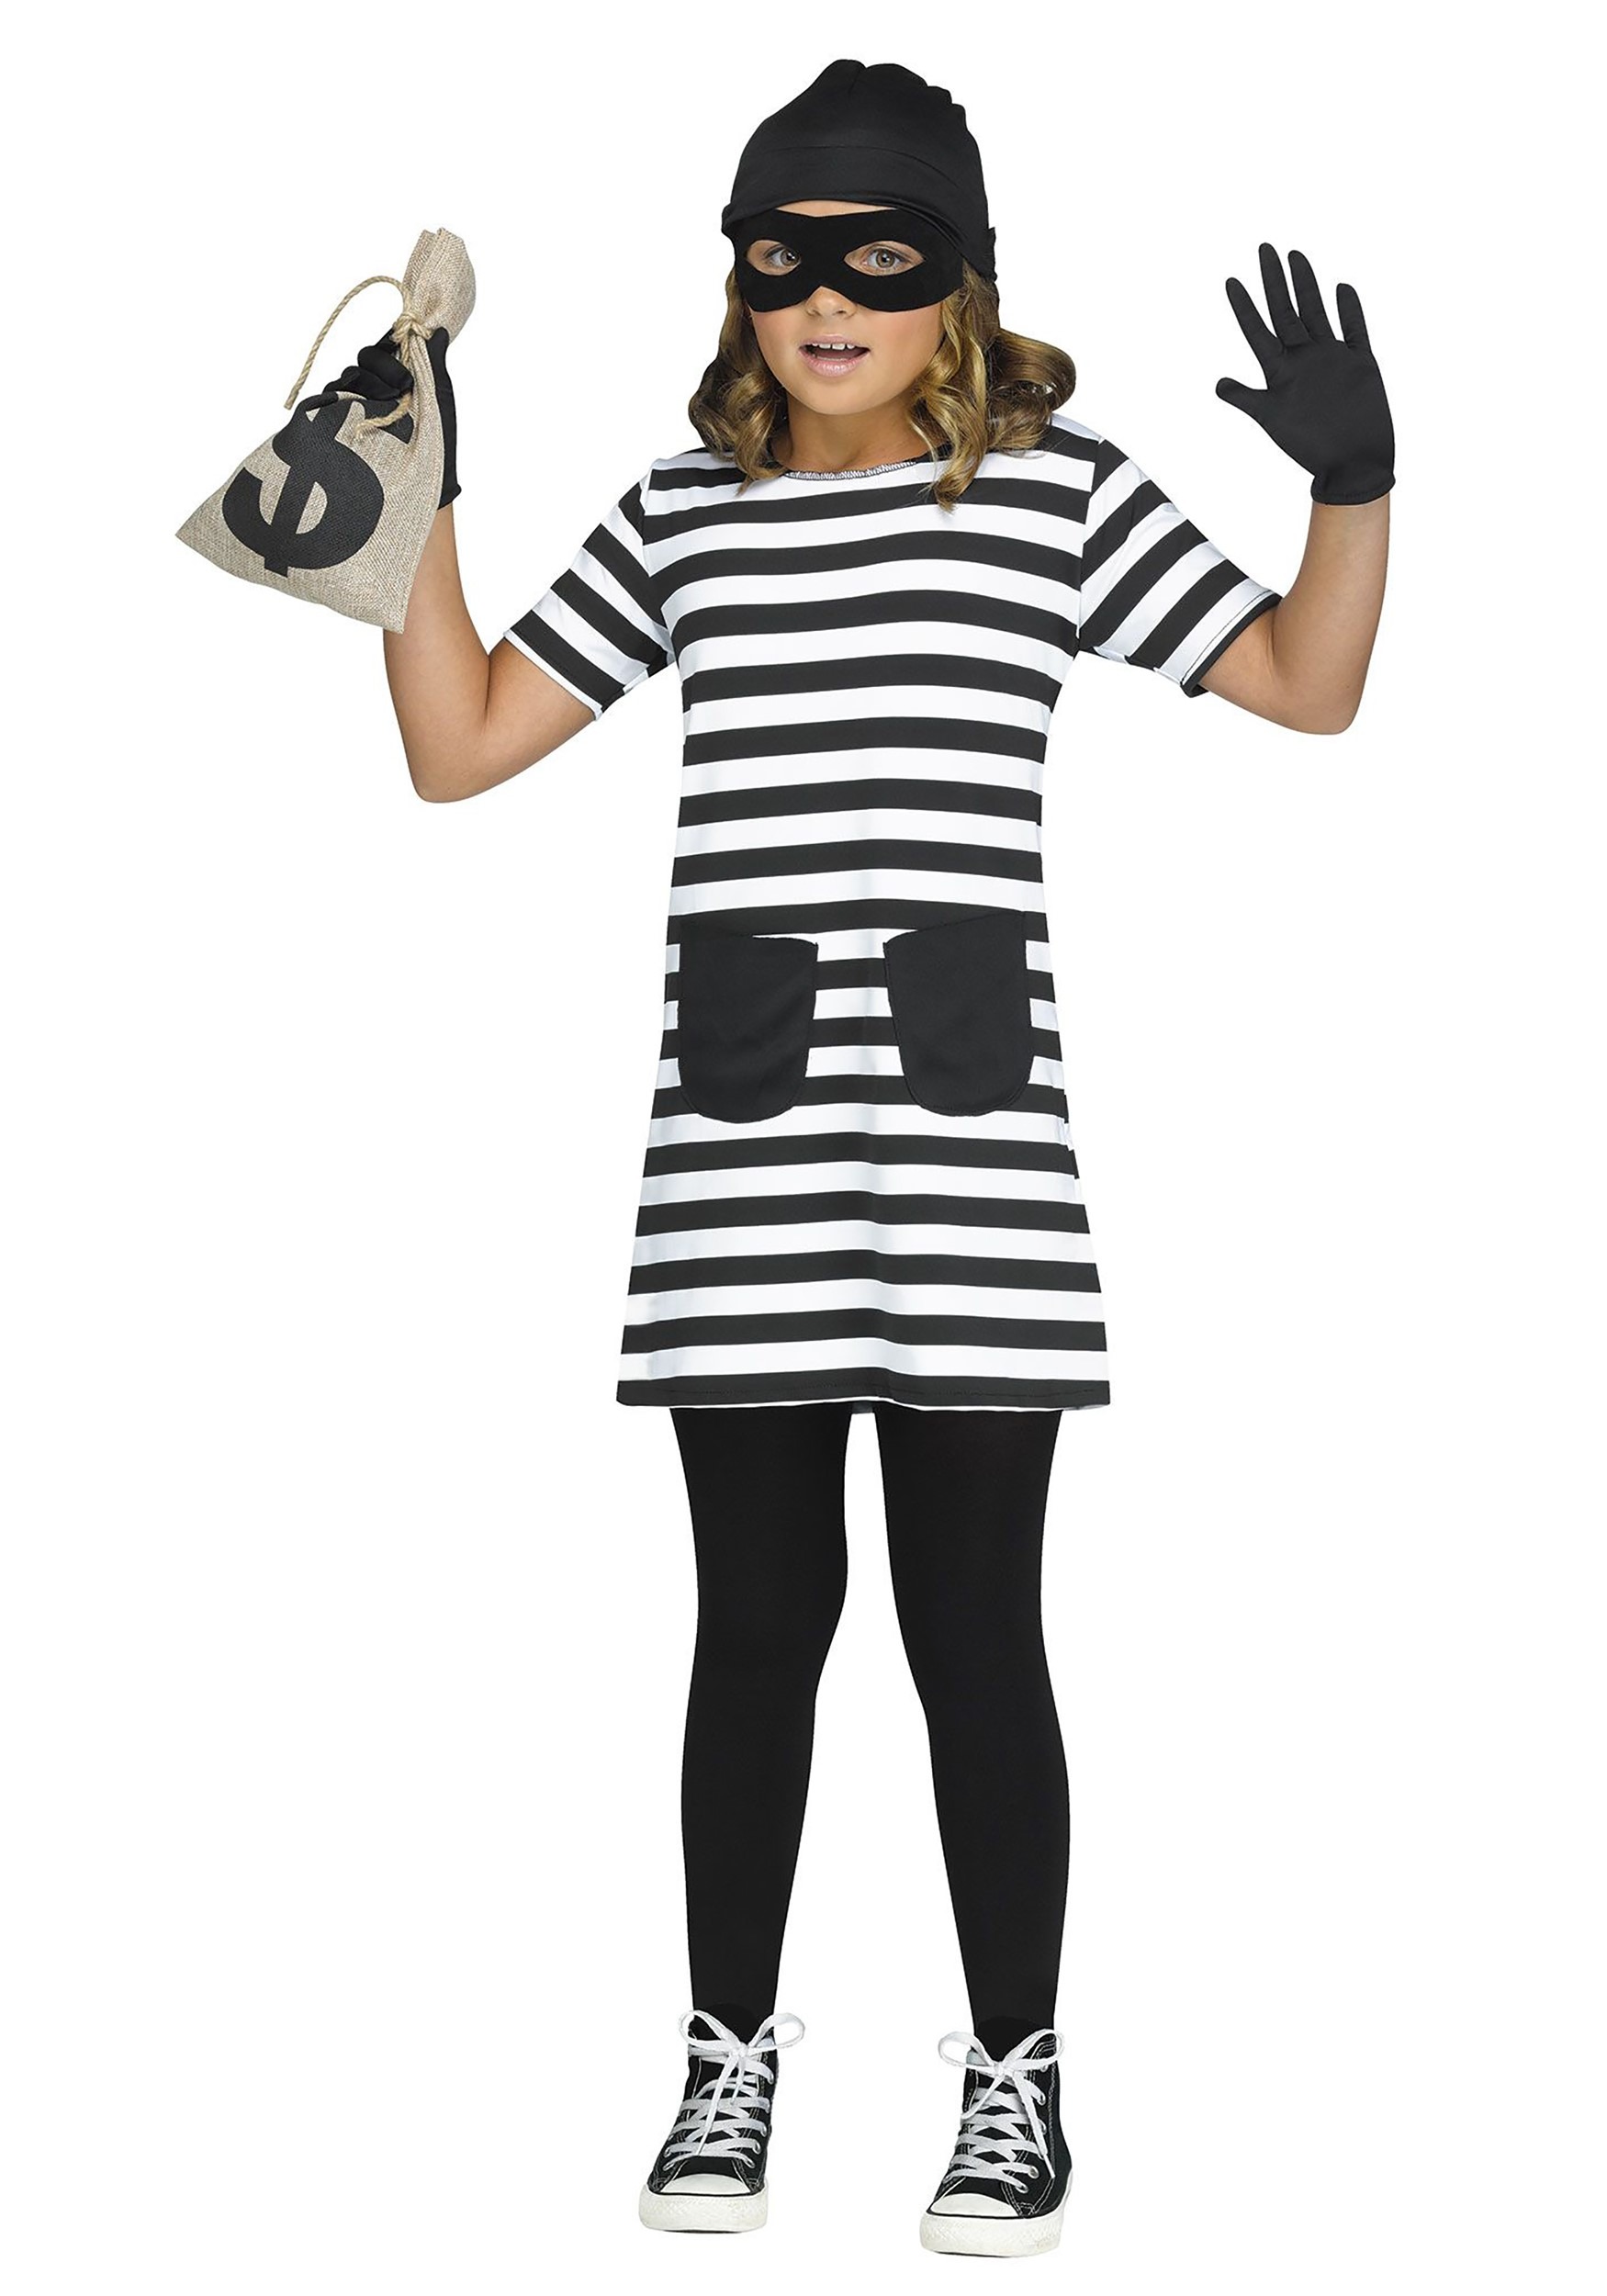 Girls Burglar Costume | Burglar Costumes and Accessories